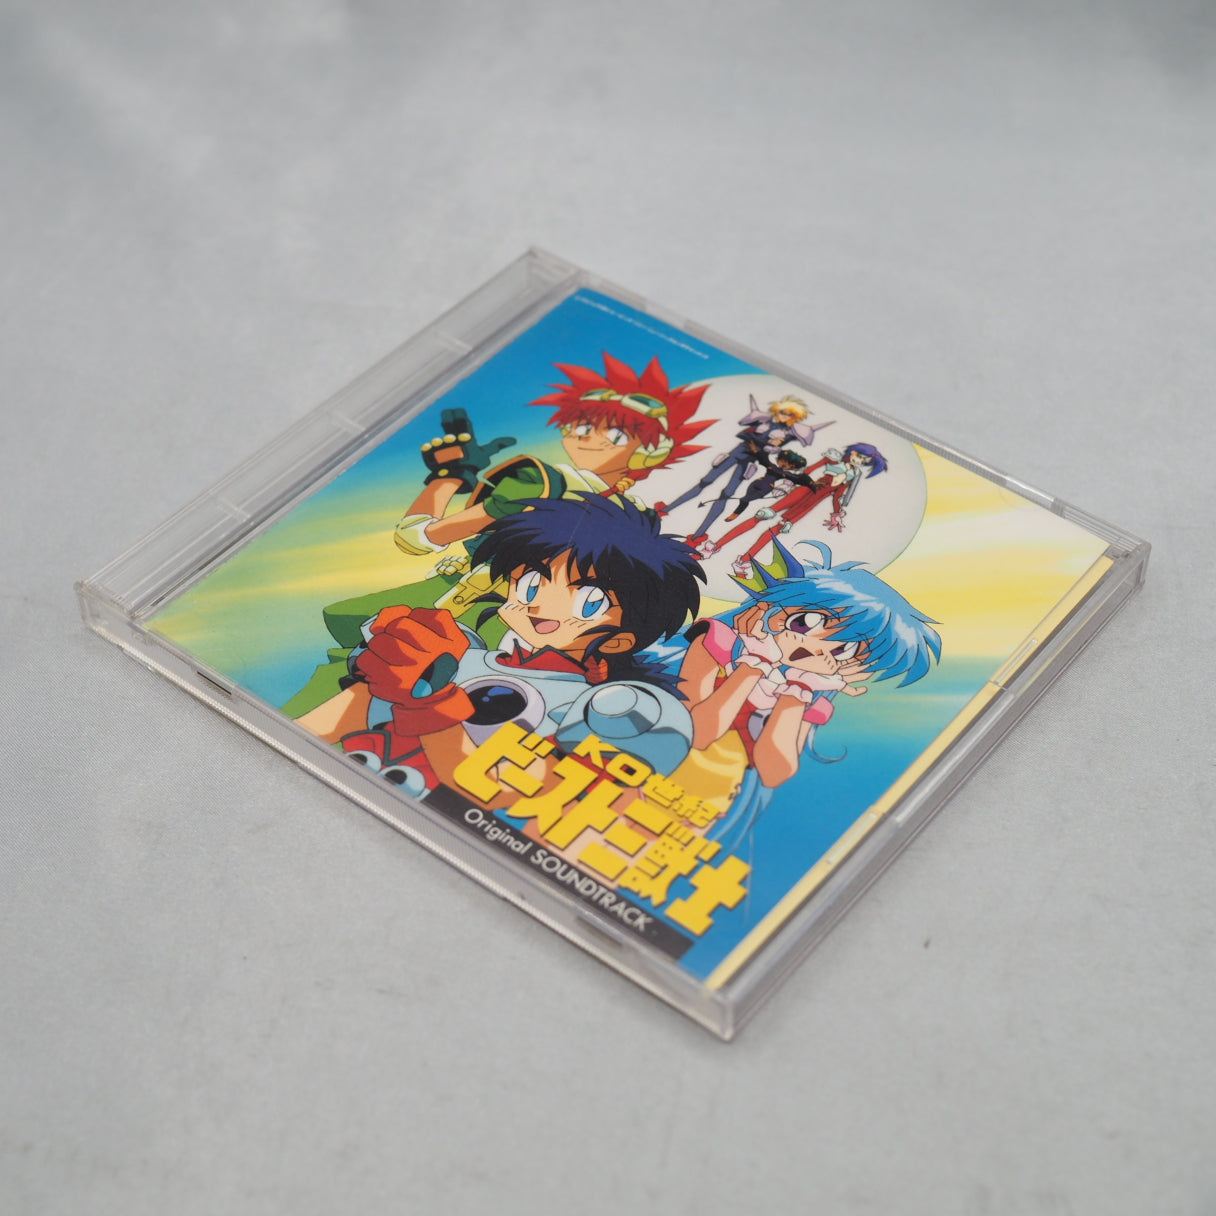 KO Century Beast Three Beastmen Original Soundtrack CD W/ sticker